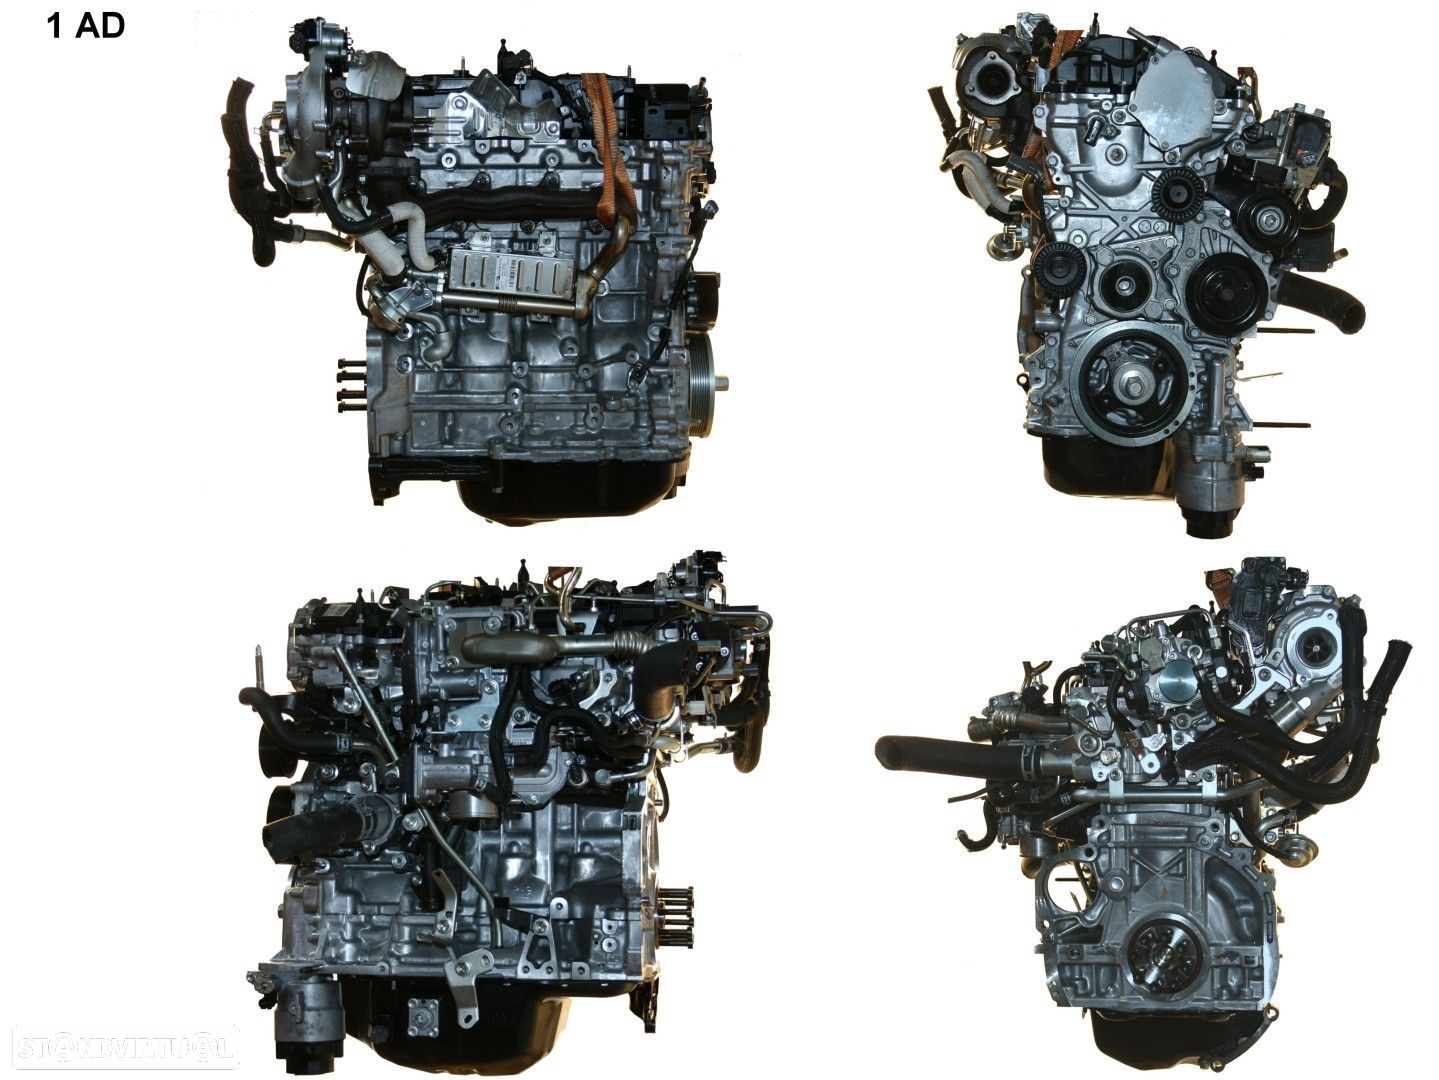 Motor Completo  Usado TOYOTA RAV4 2.0 D-4D 1AD - 1